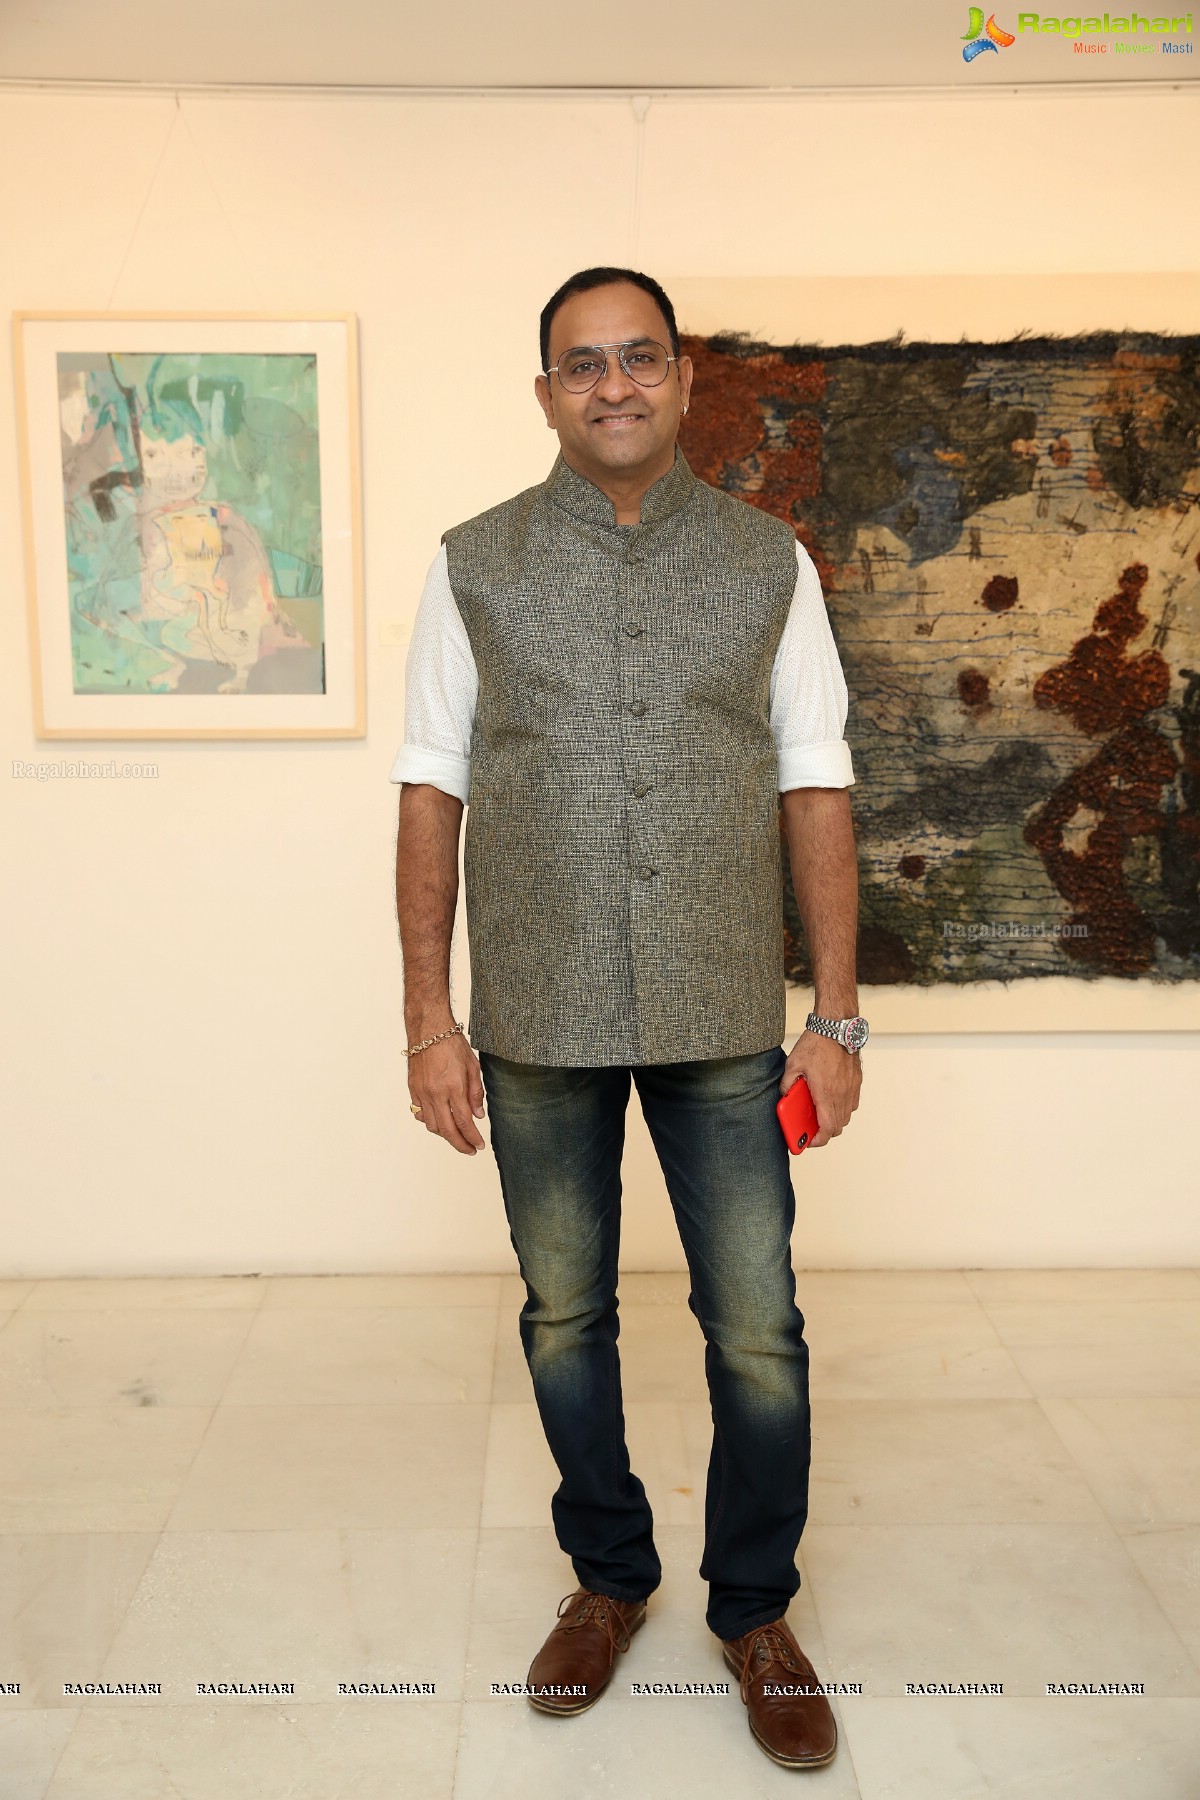 Triloka - The Worlds of Three Emerging Artists at Shrishti Art Gallery